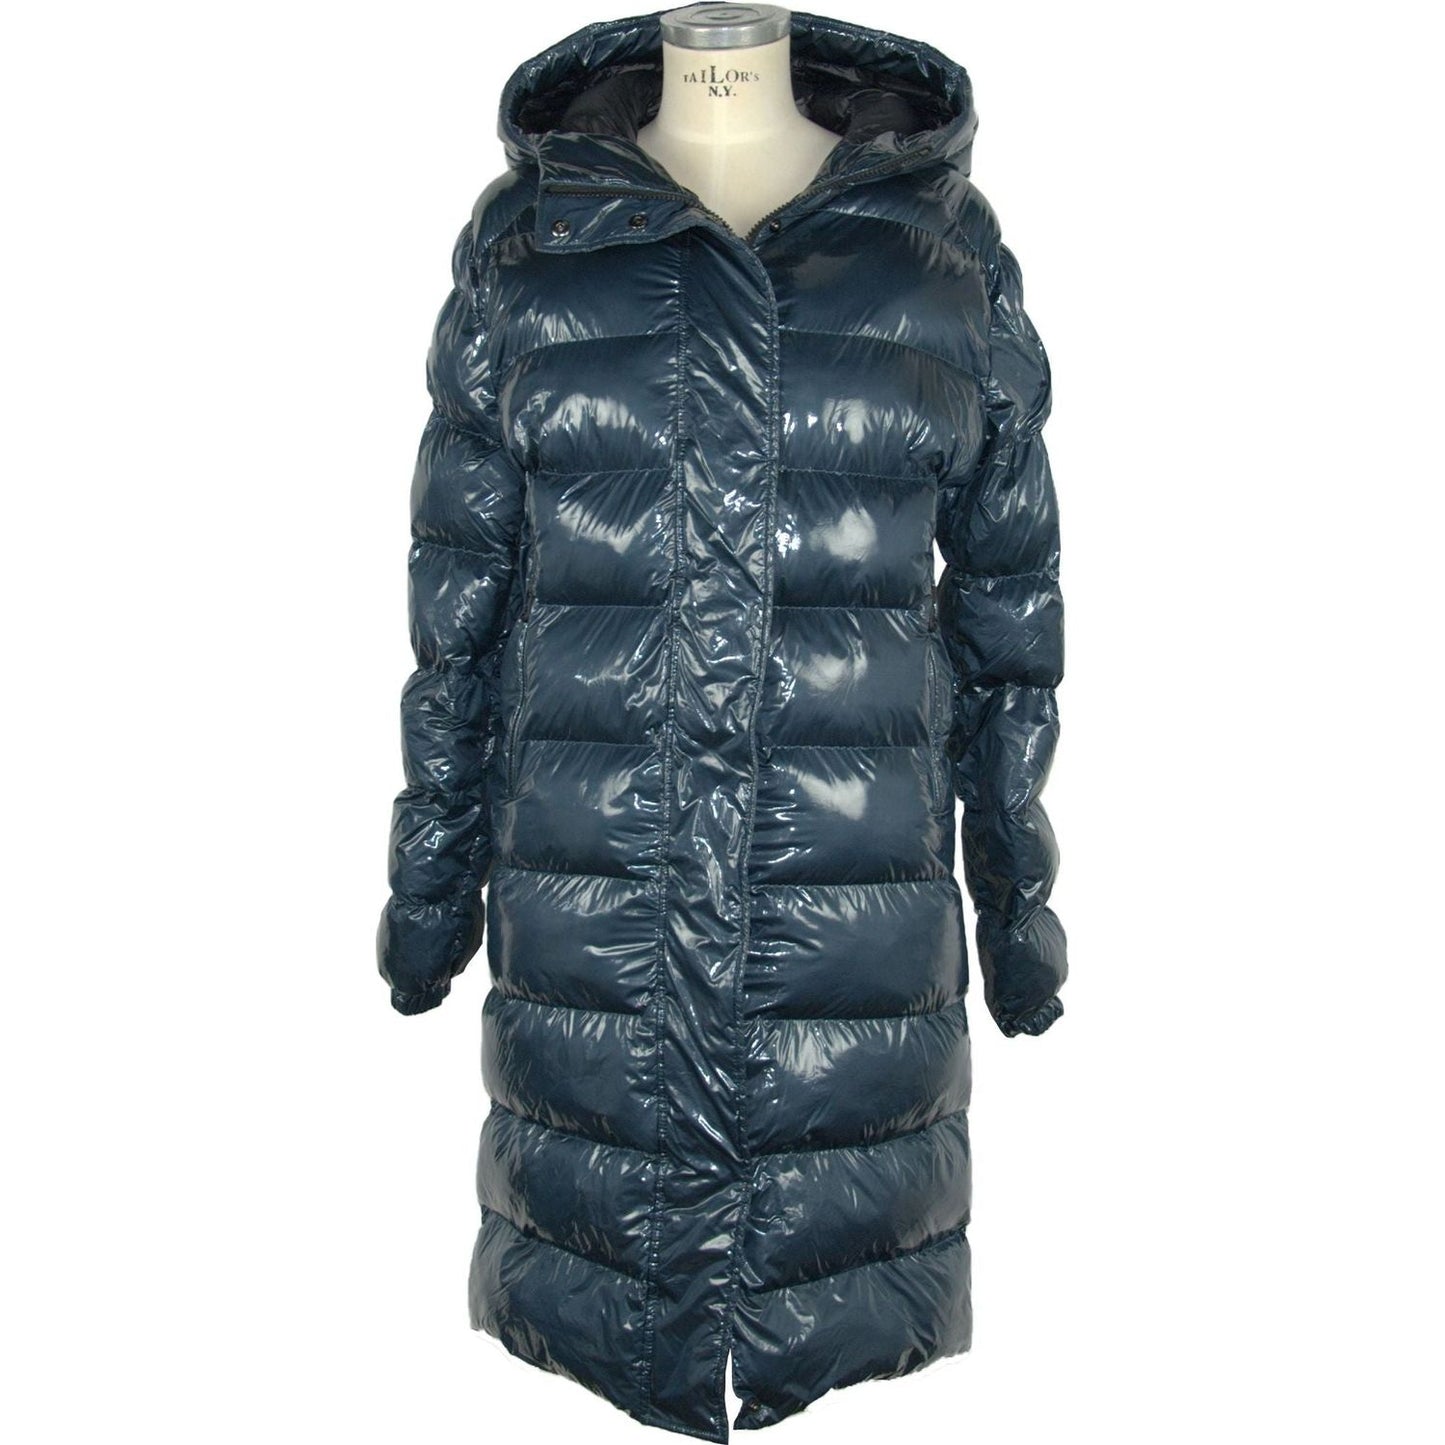 Refrigiwear Elegant Long Down Jacket for Stylish Warmth WOMAN COATS & JACKETS blue-polyamide-jackets-coat-3 stock_product_image_863_1162662017-501e0a17-63d.jpg